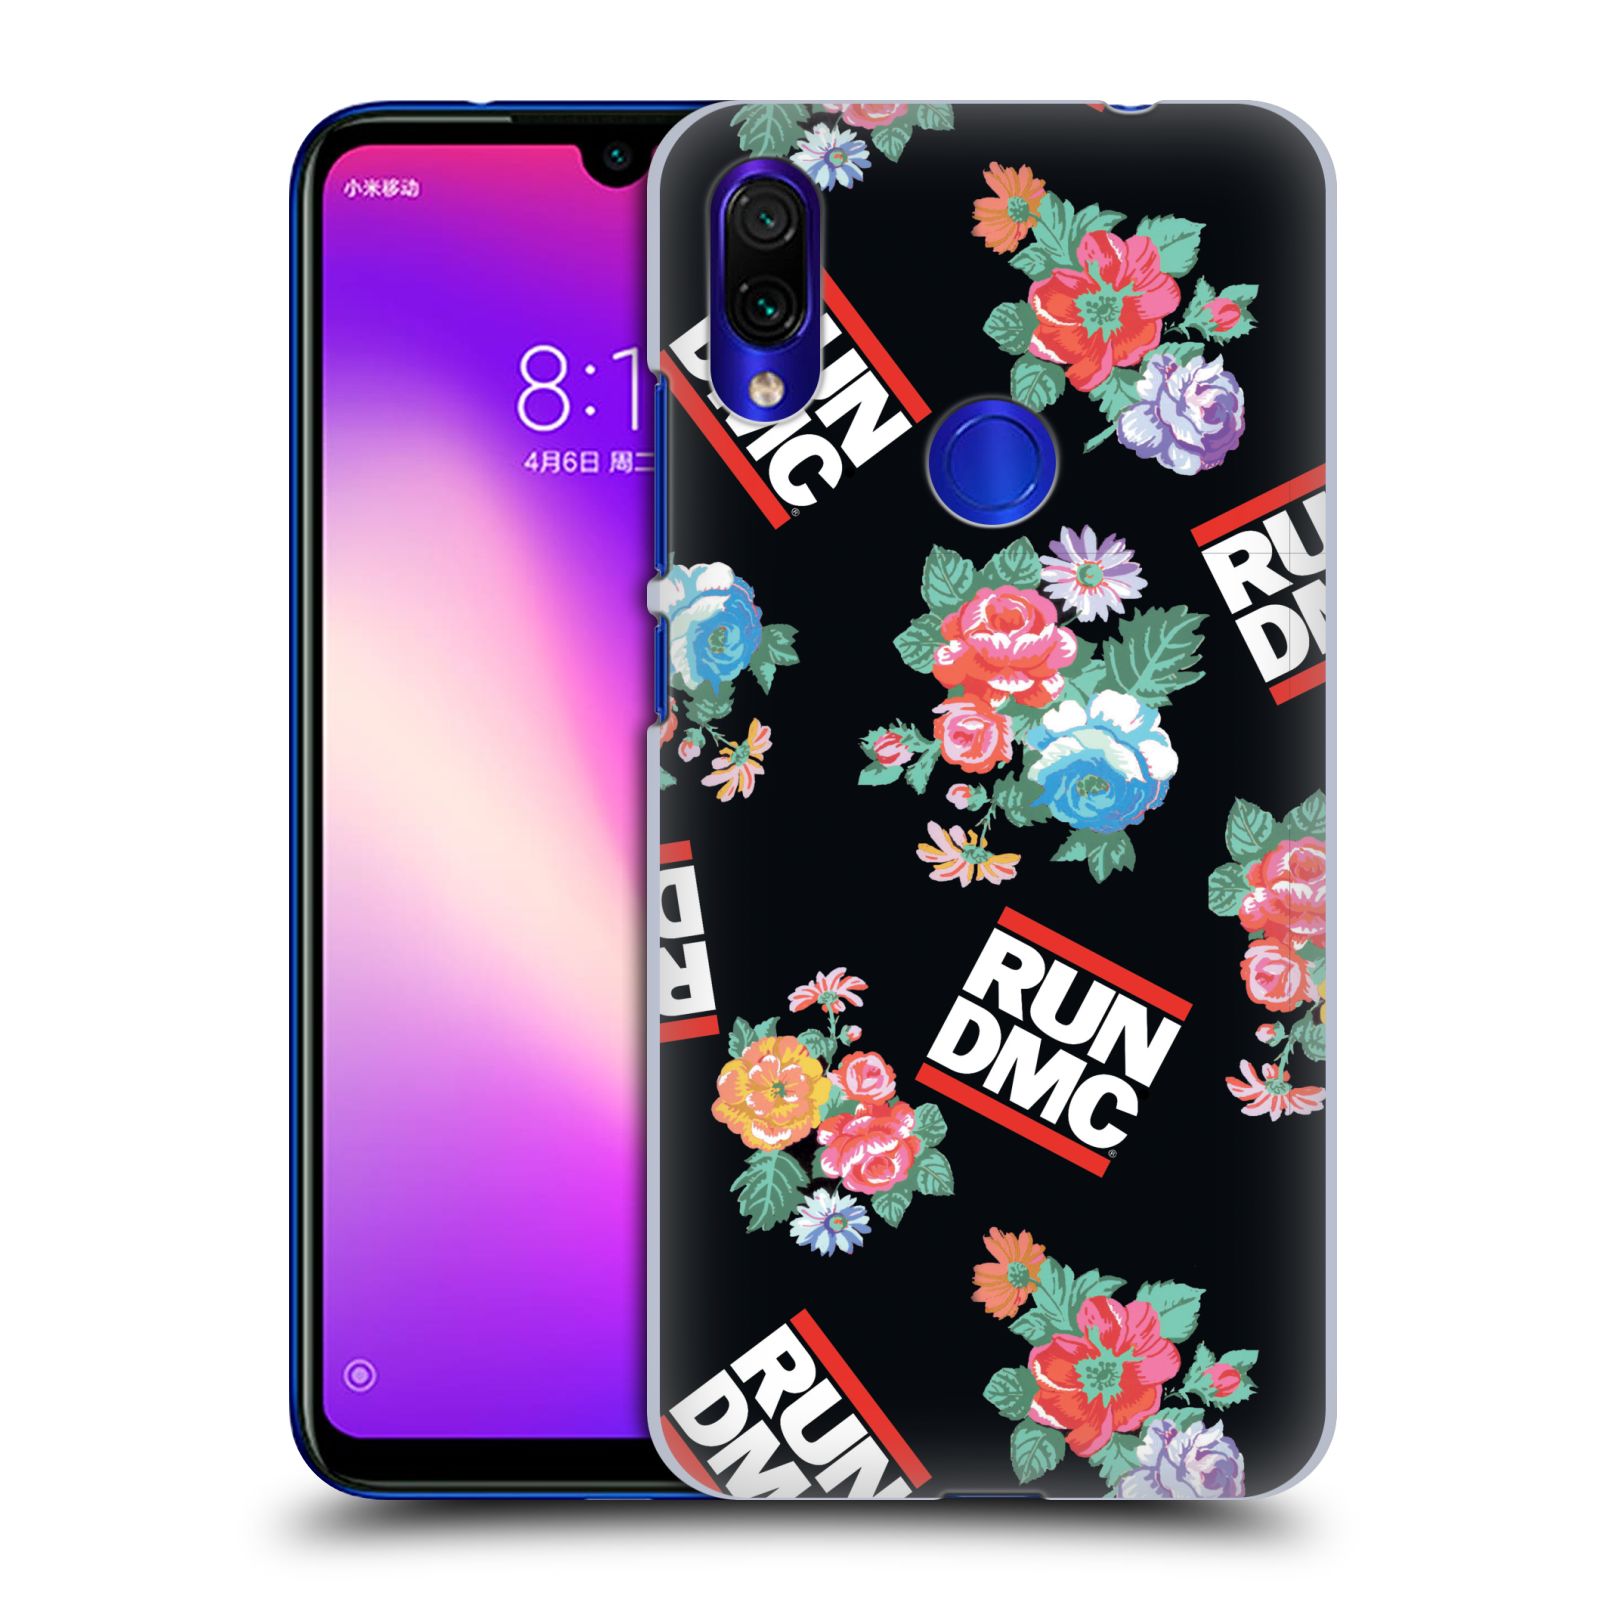 Pouzdro na mobil Xiaomi Redmi Note 7 - Head Case - rapová kapela Run DMC květiny černé pozadí